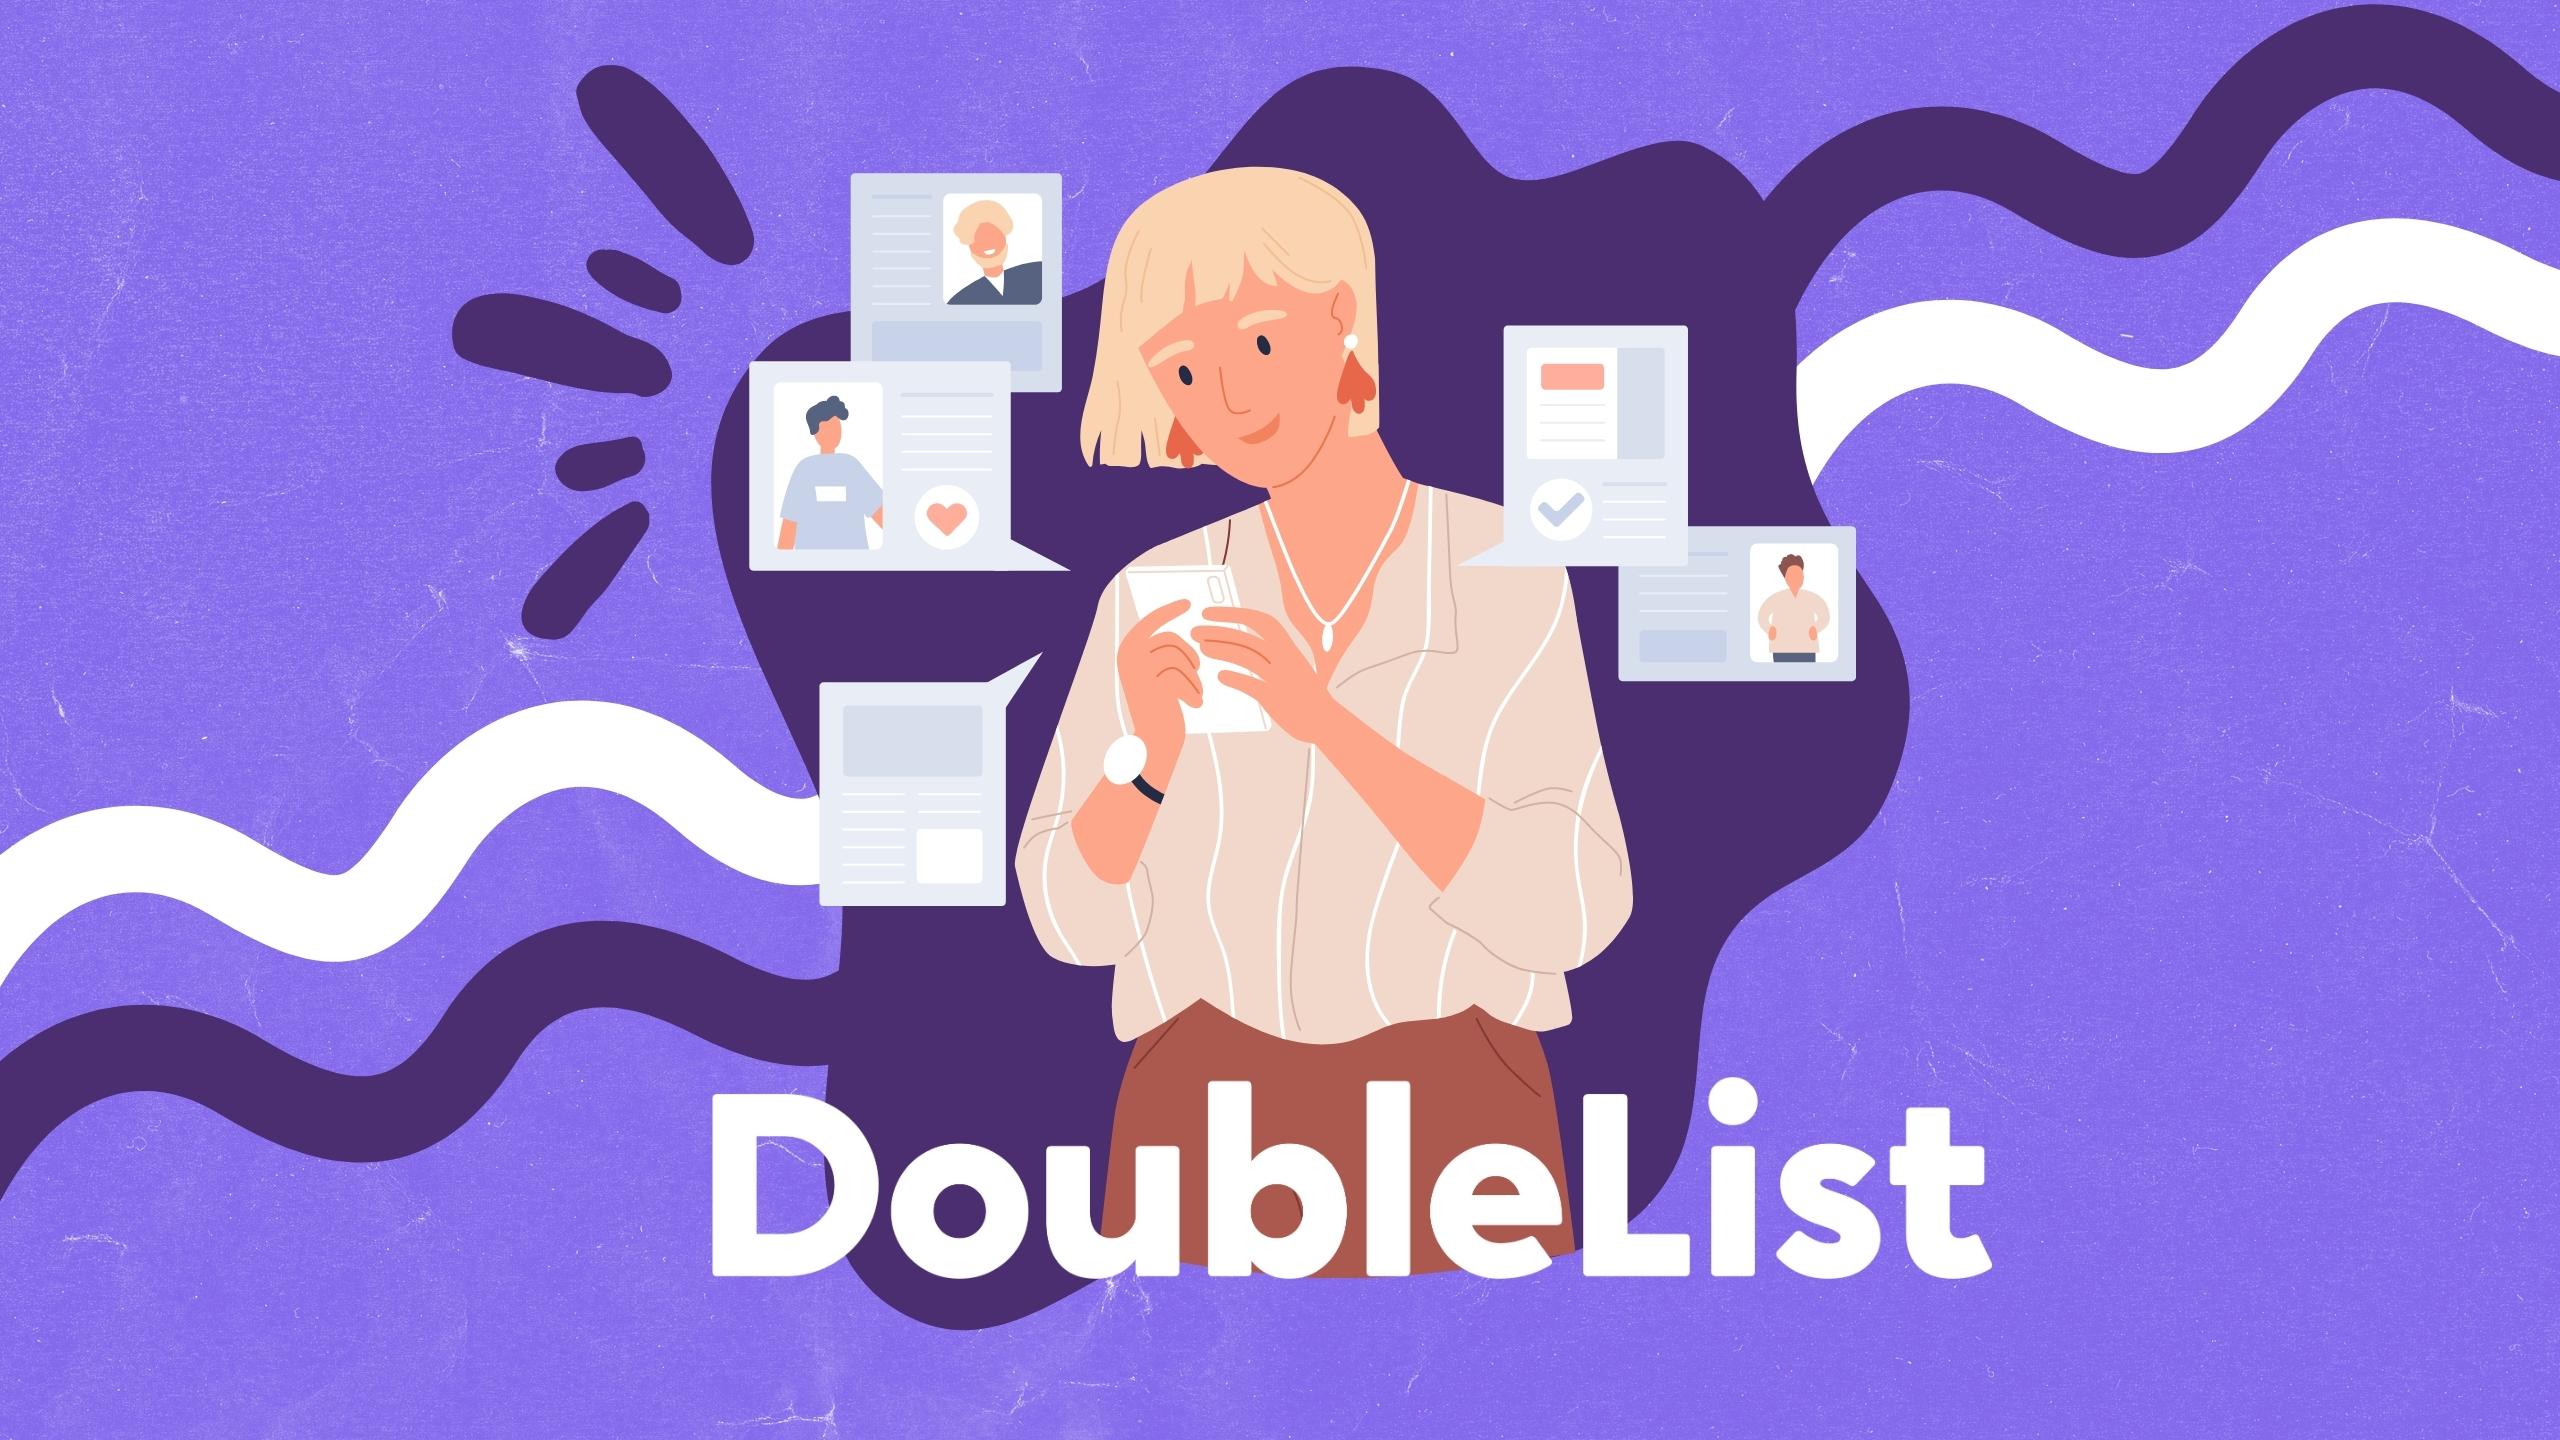 5. Doublelist - Dating App